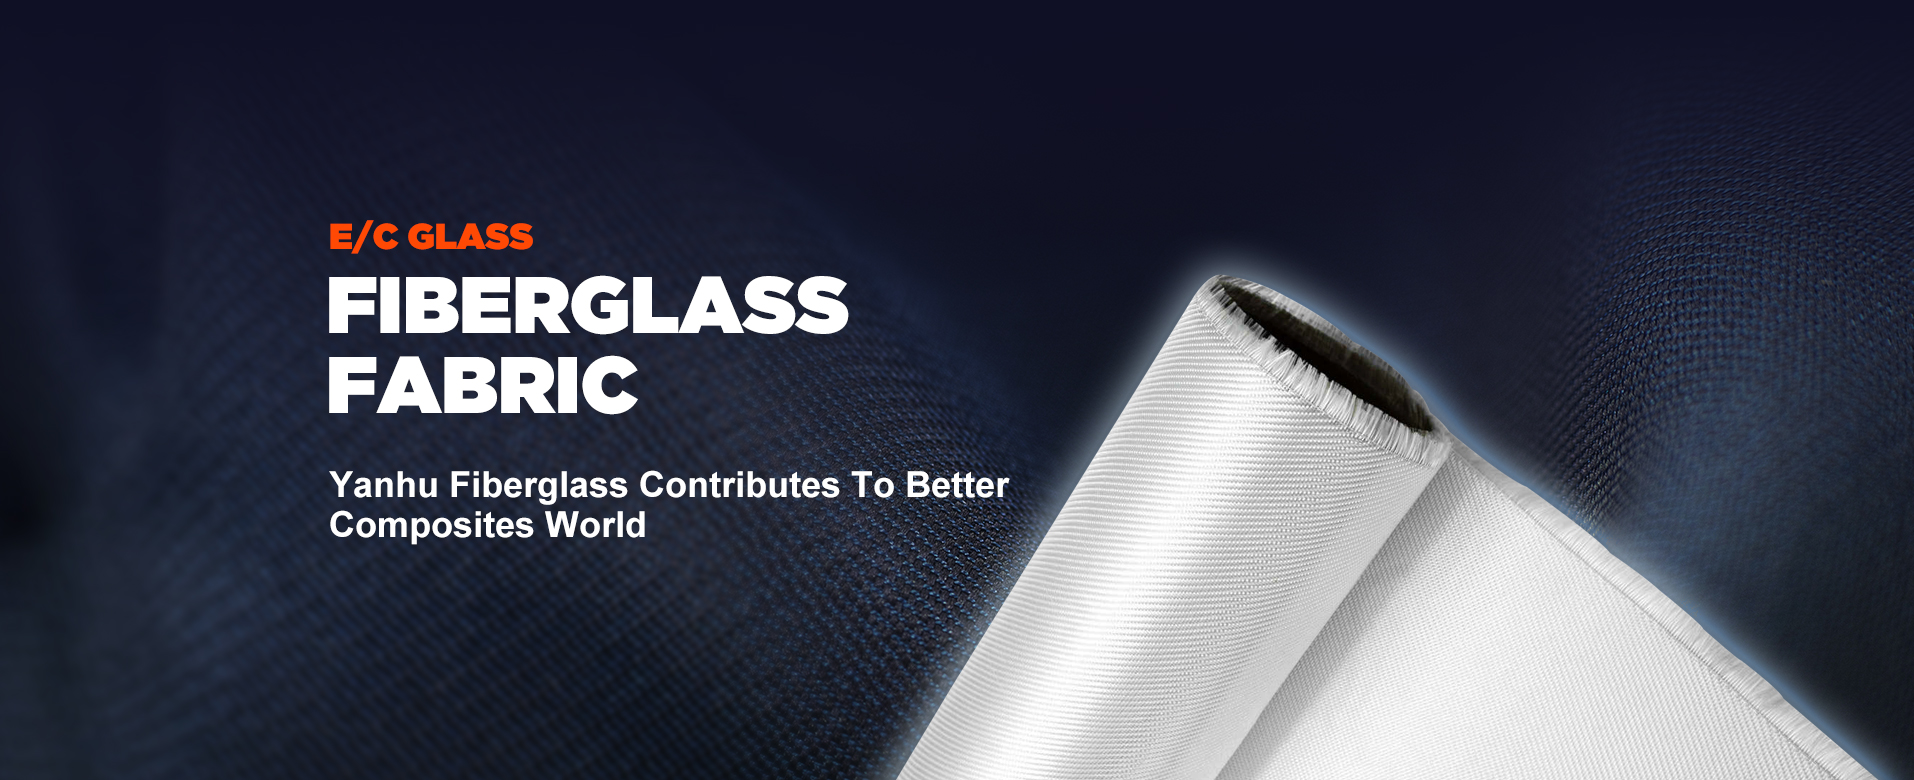 e/c glass Fiberglass Fabric